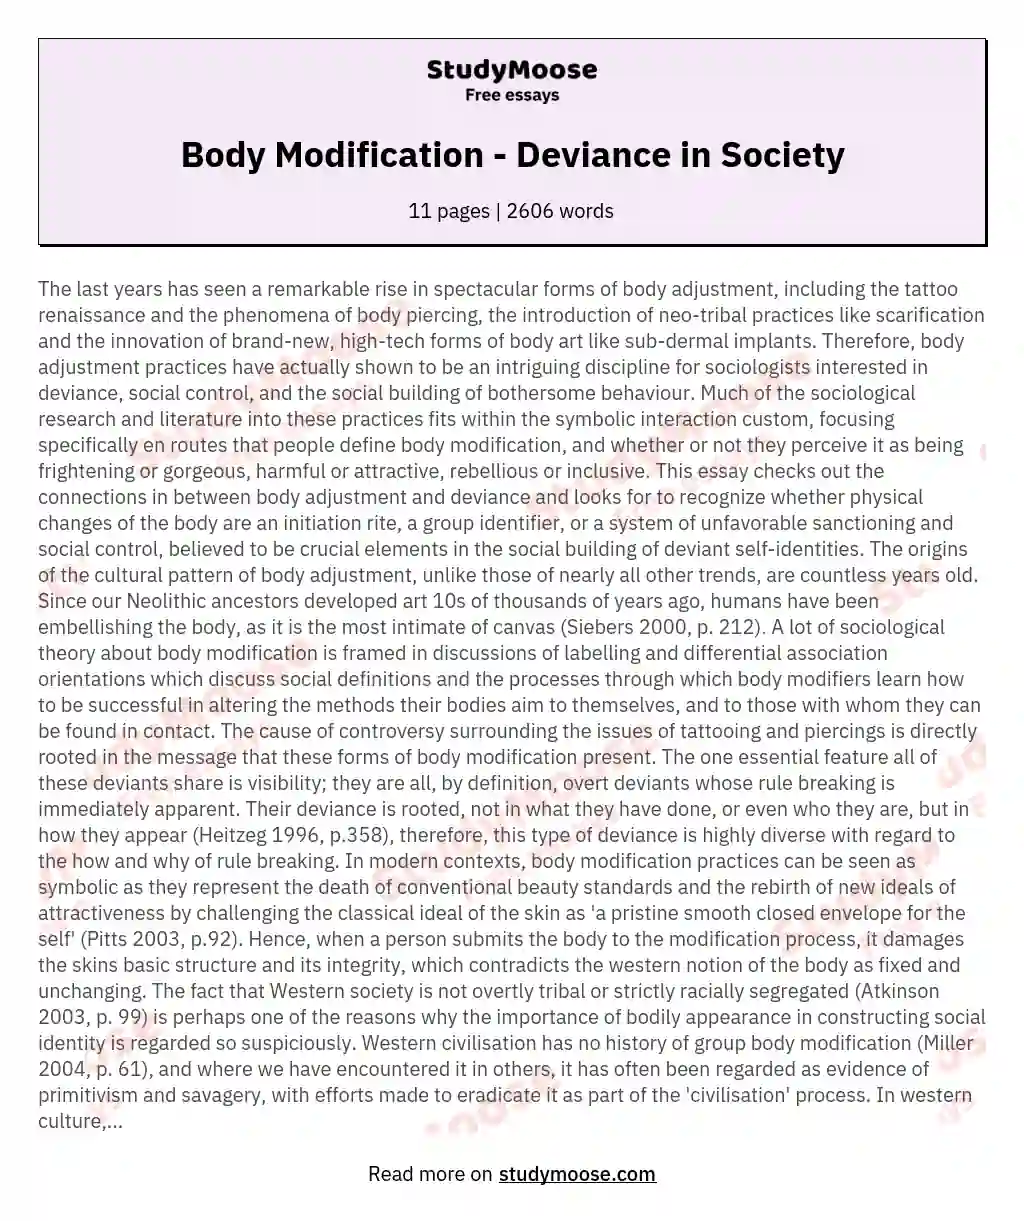 Body Modification - Deviance in Society essay